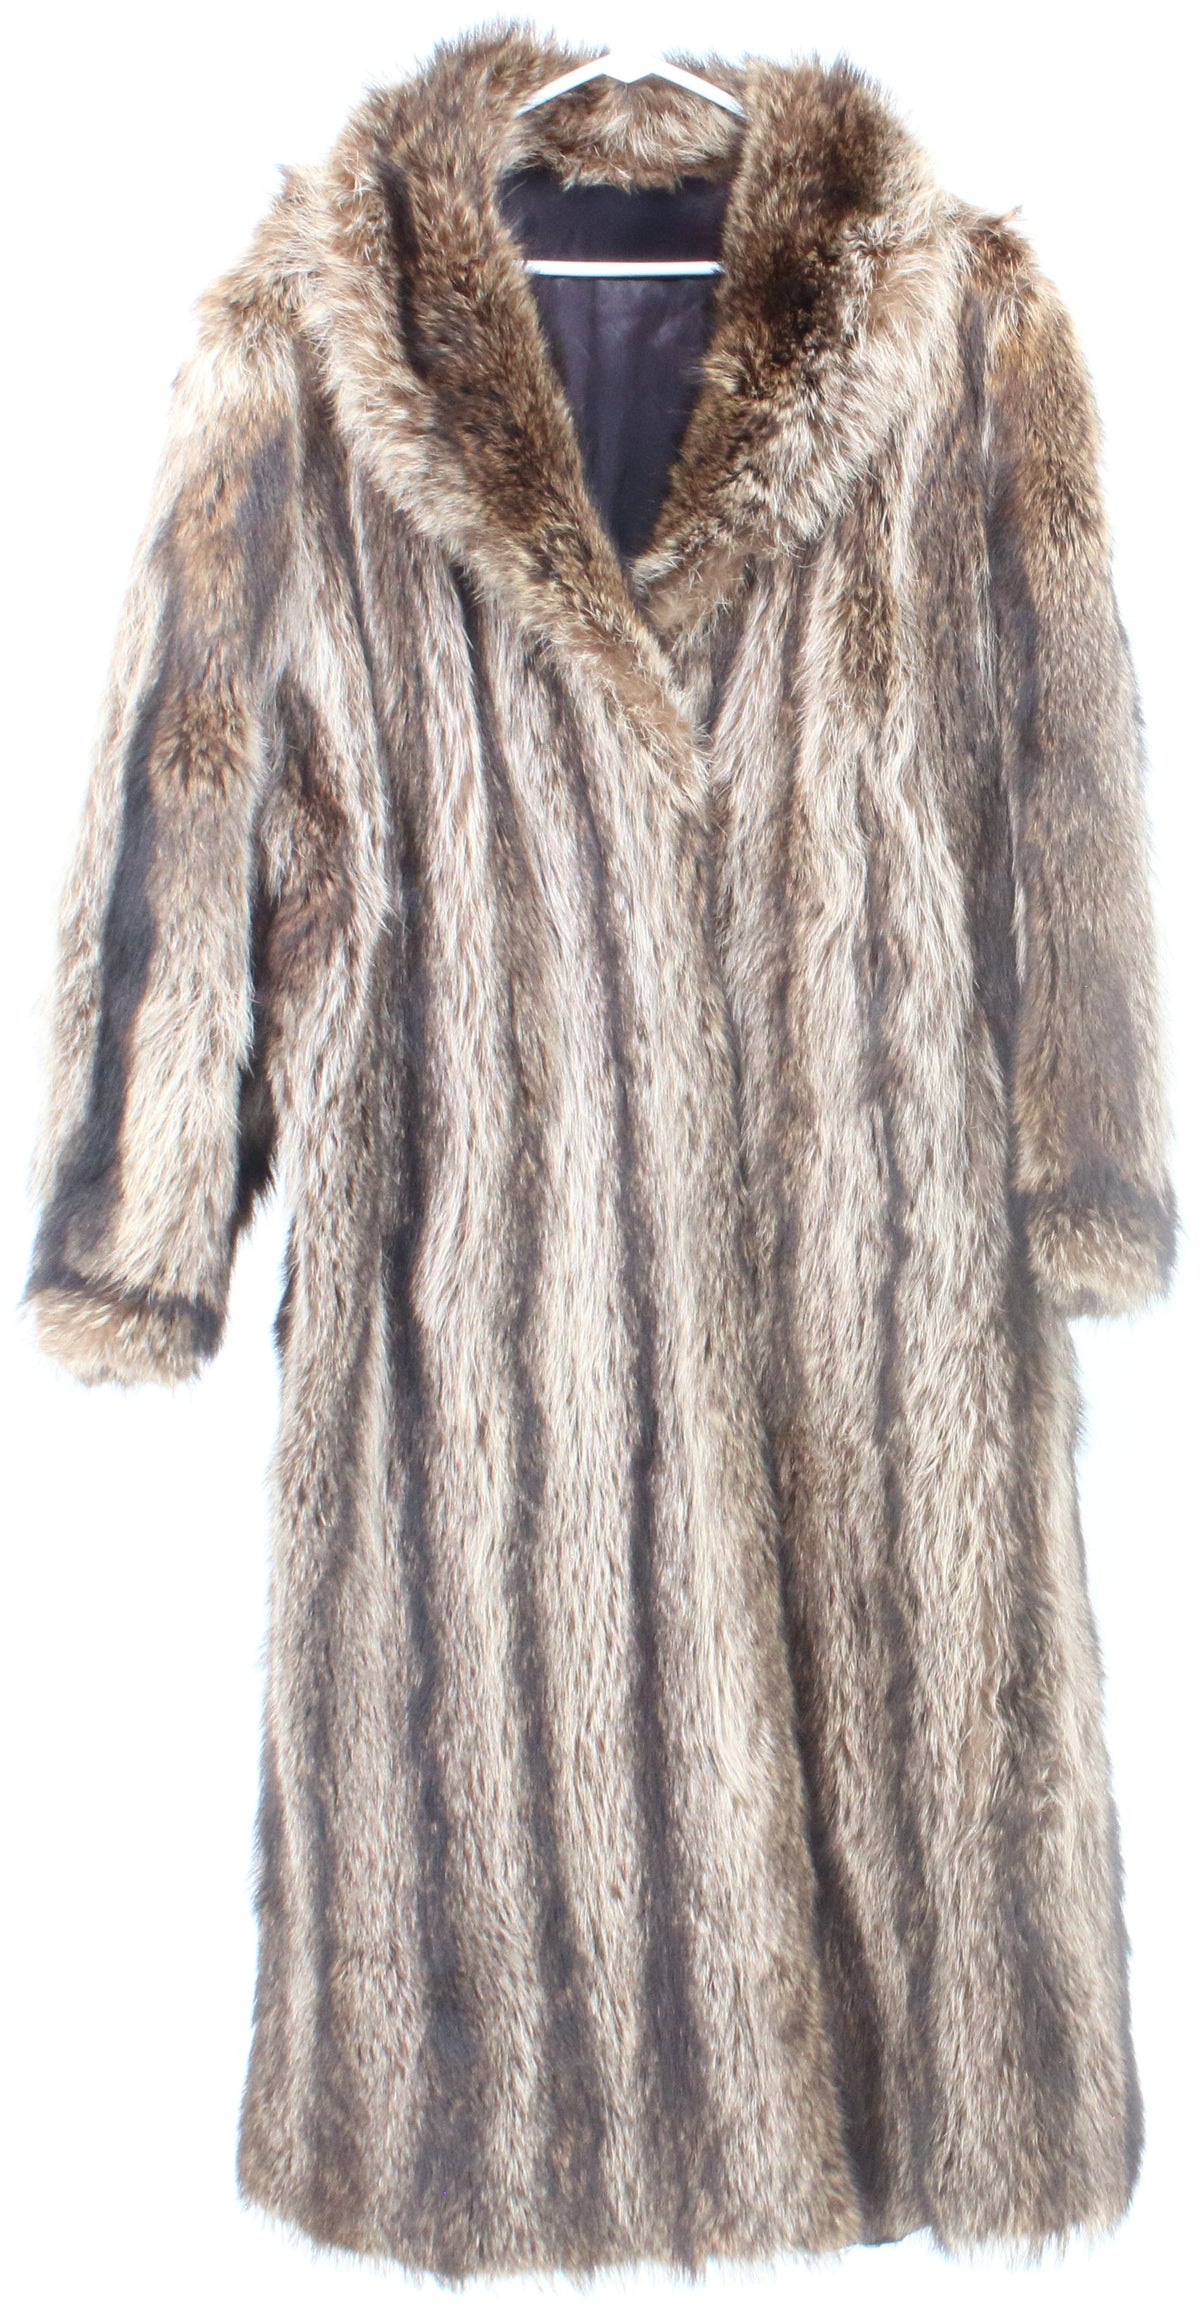 Brown Beige and Black Long Women's Fur Coat